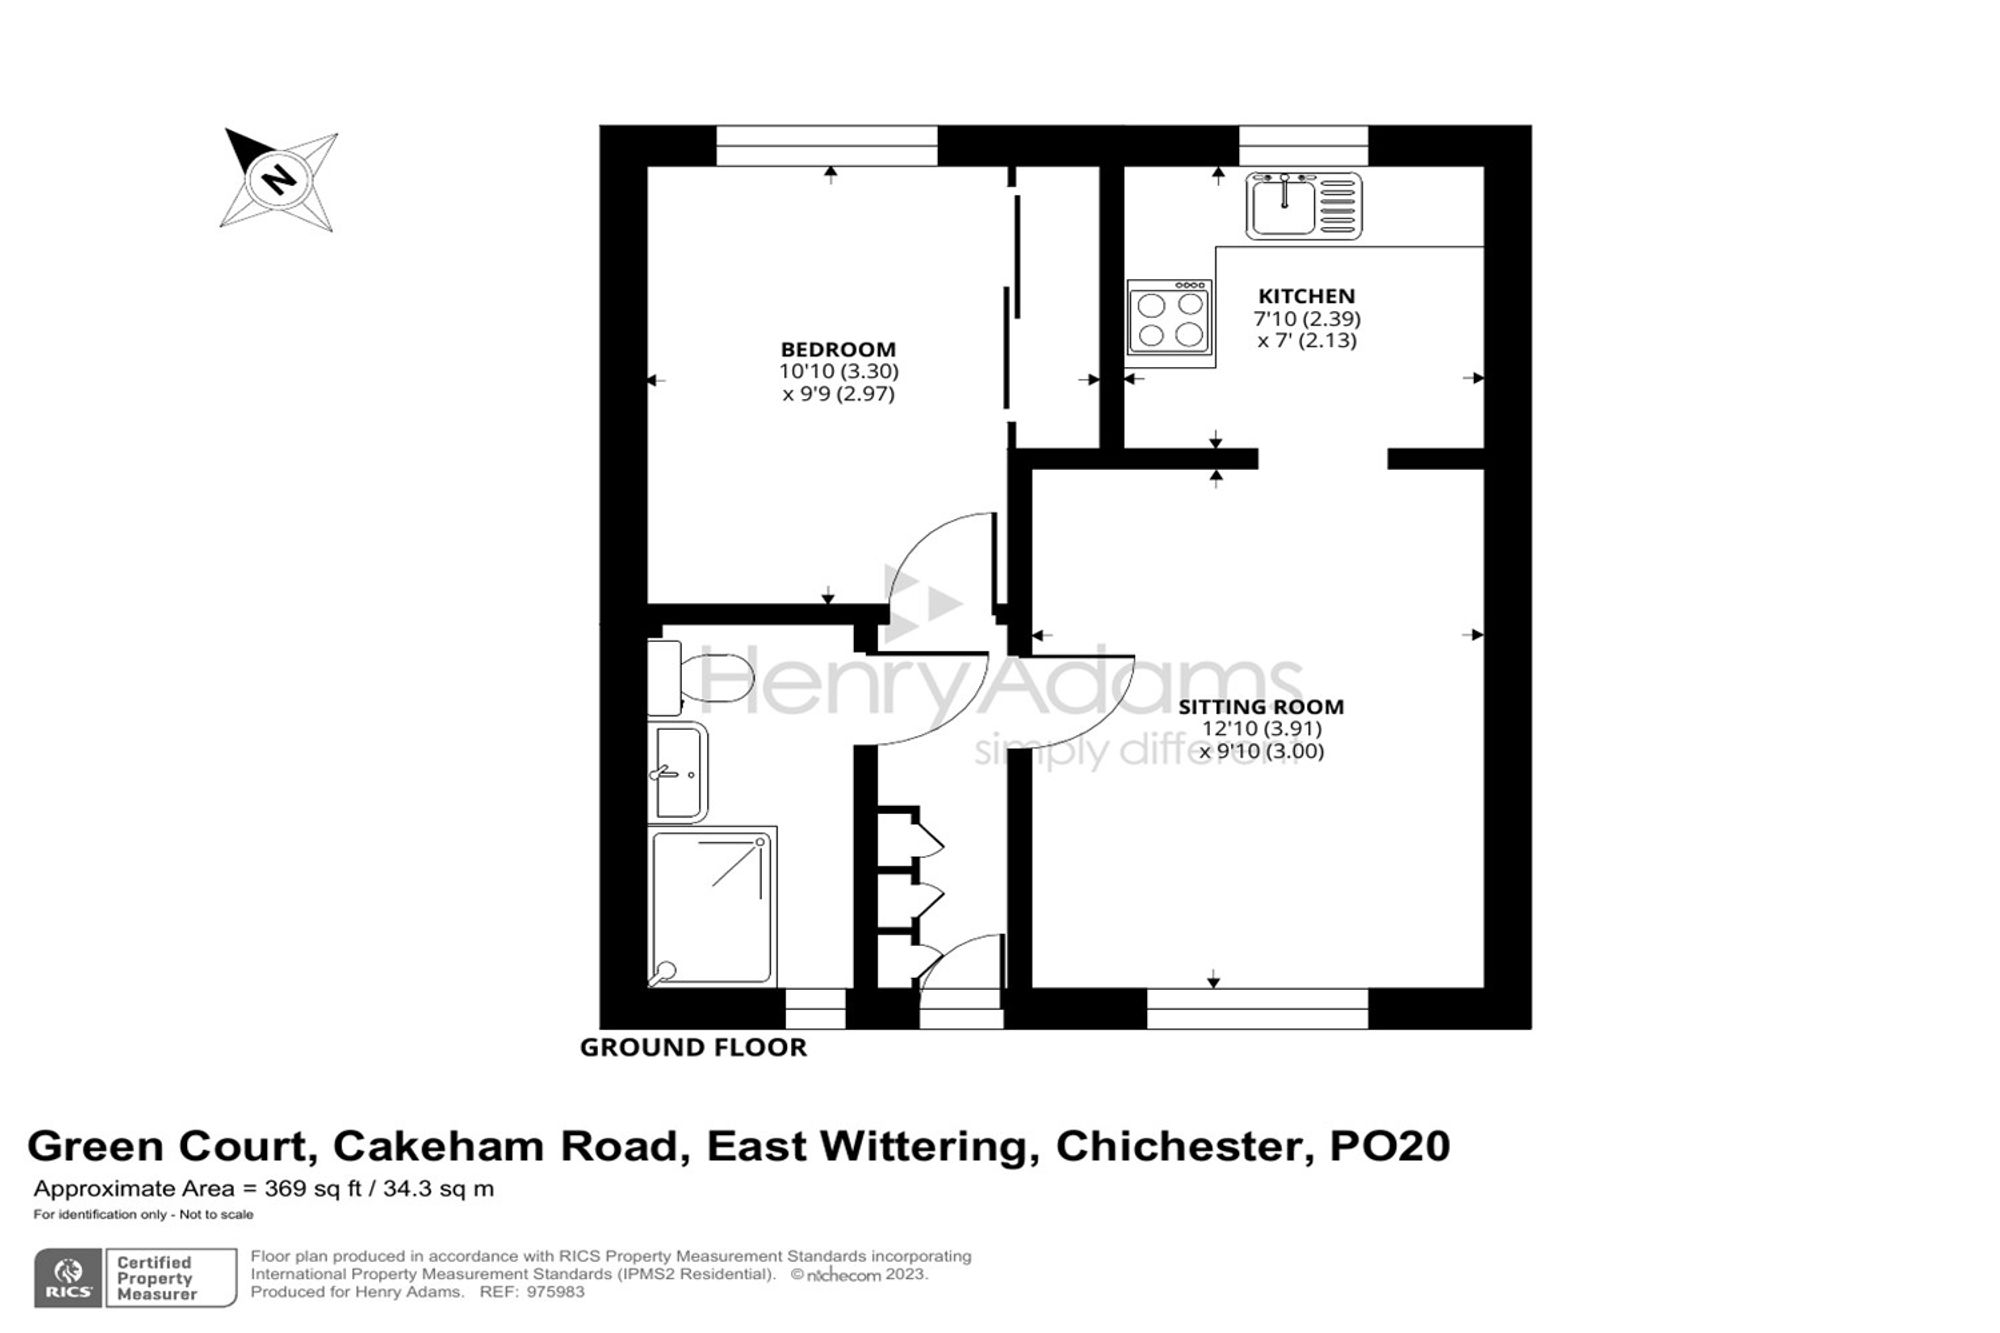 Cakeham Road, East Wittering, PO20 floorplans